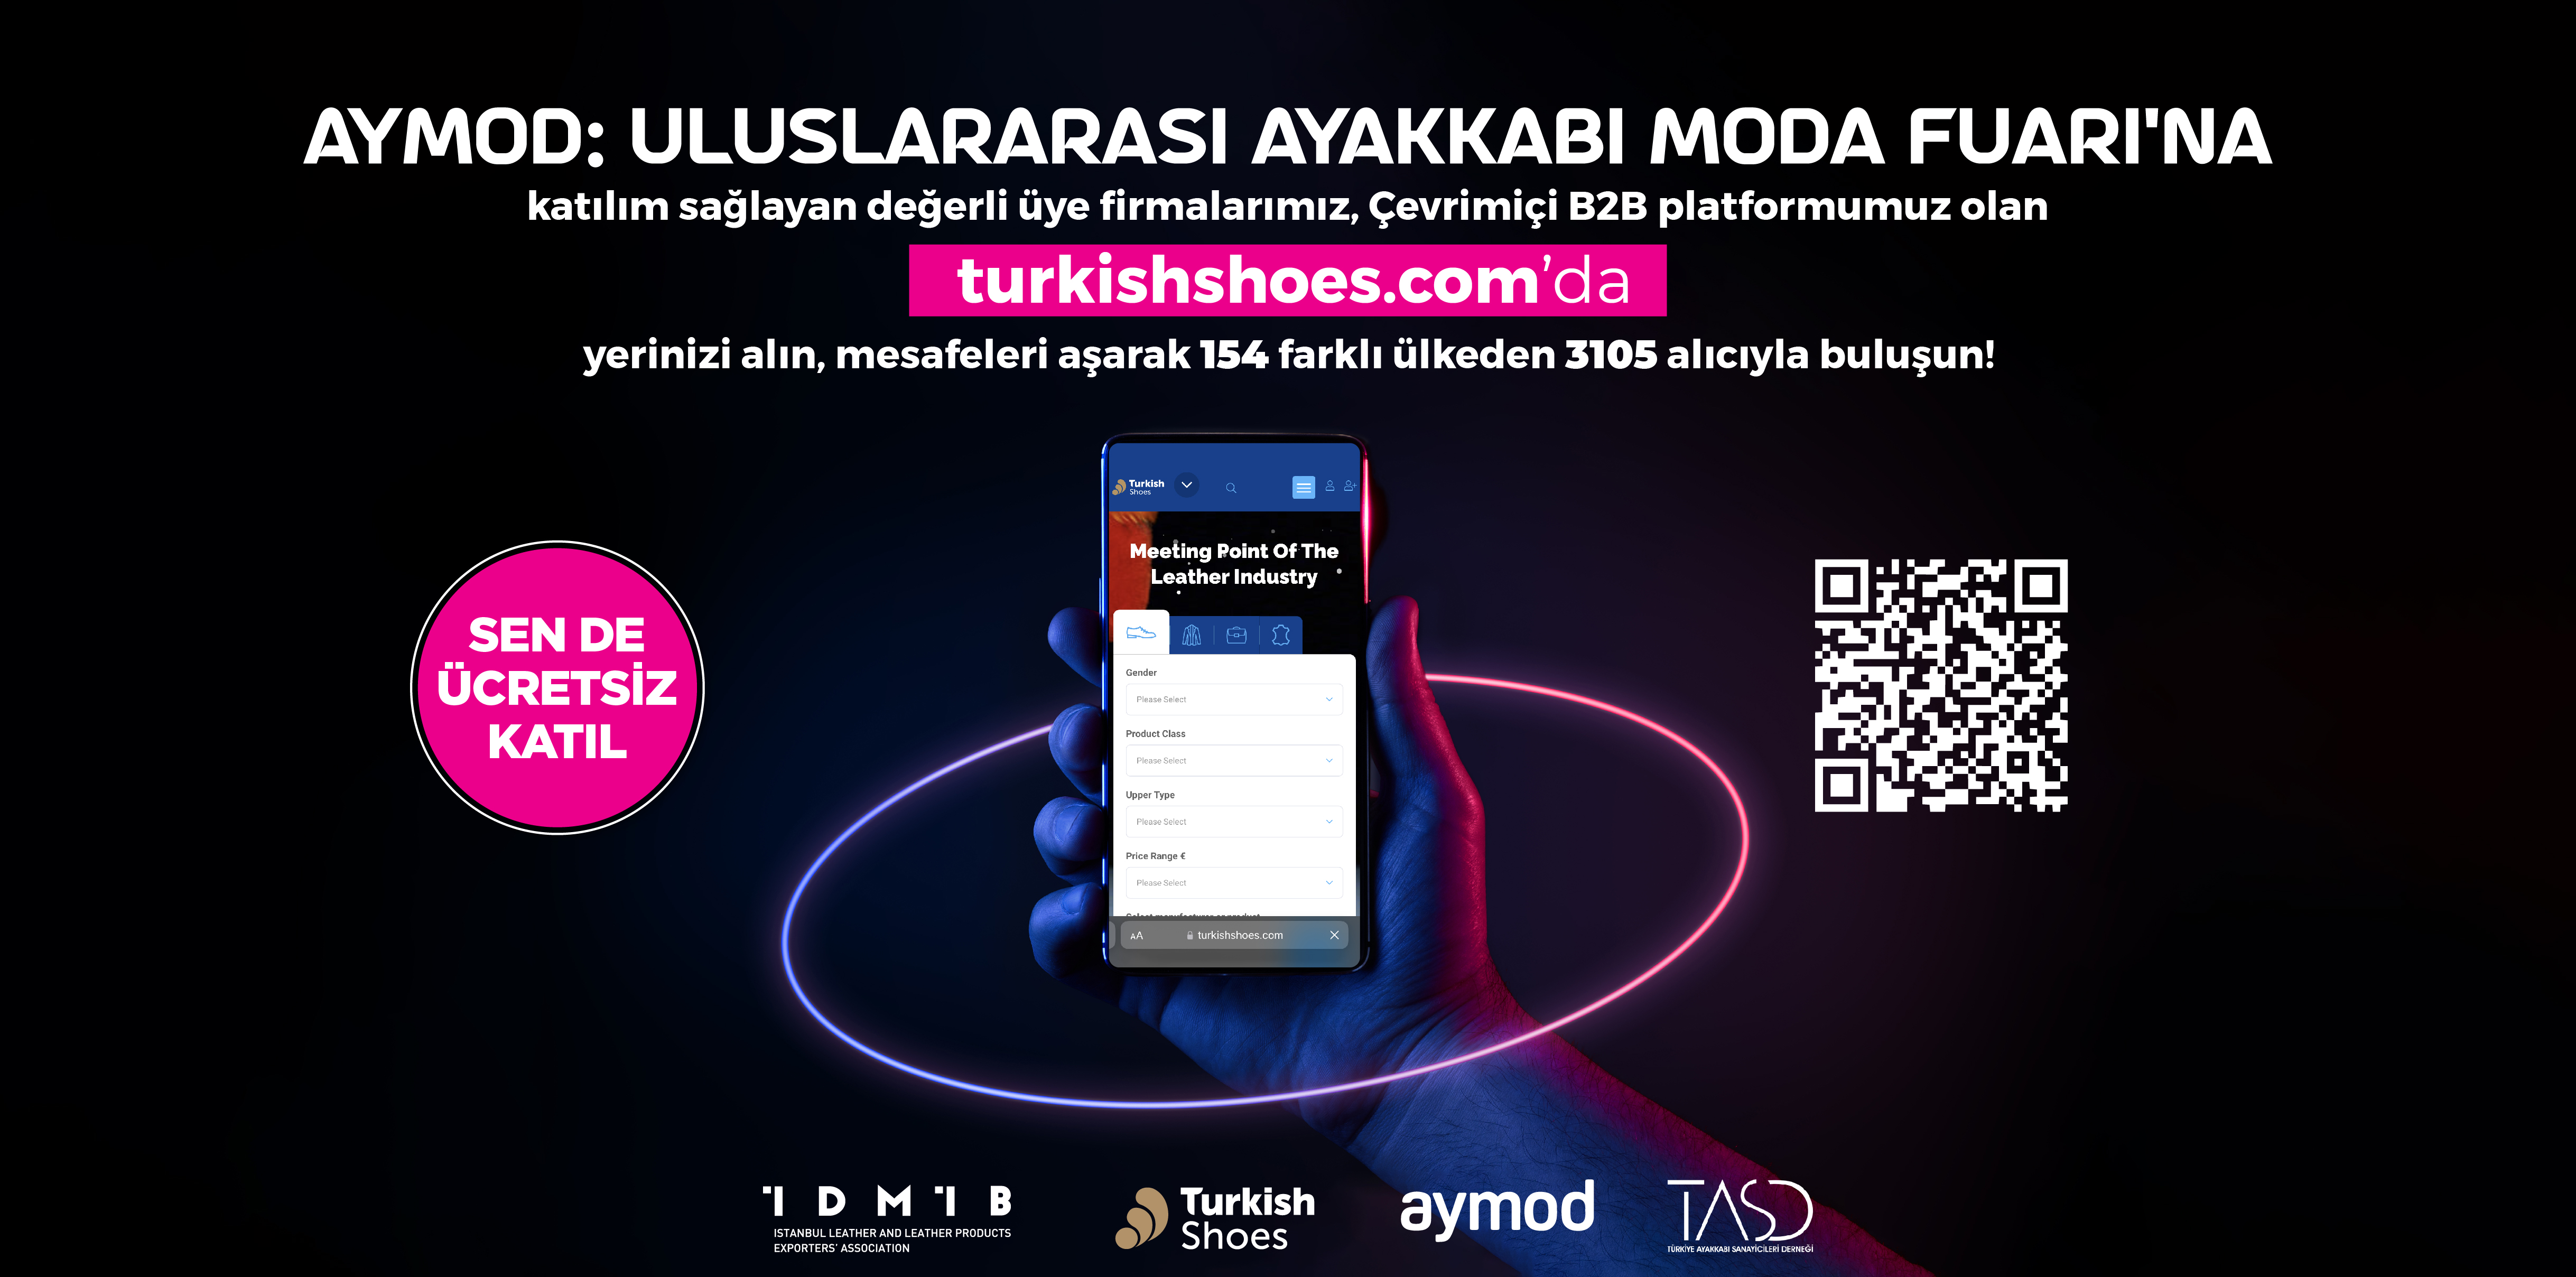 AYMOD Firmalarımız da Artık Turkishshoes.com'da!